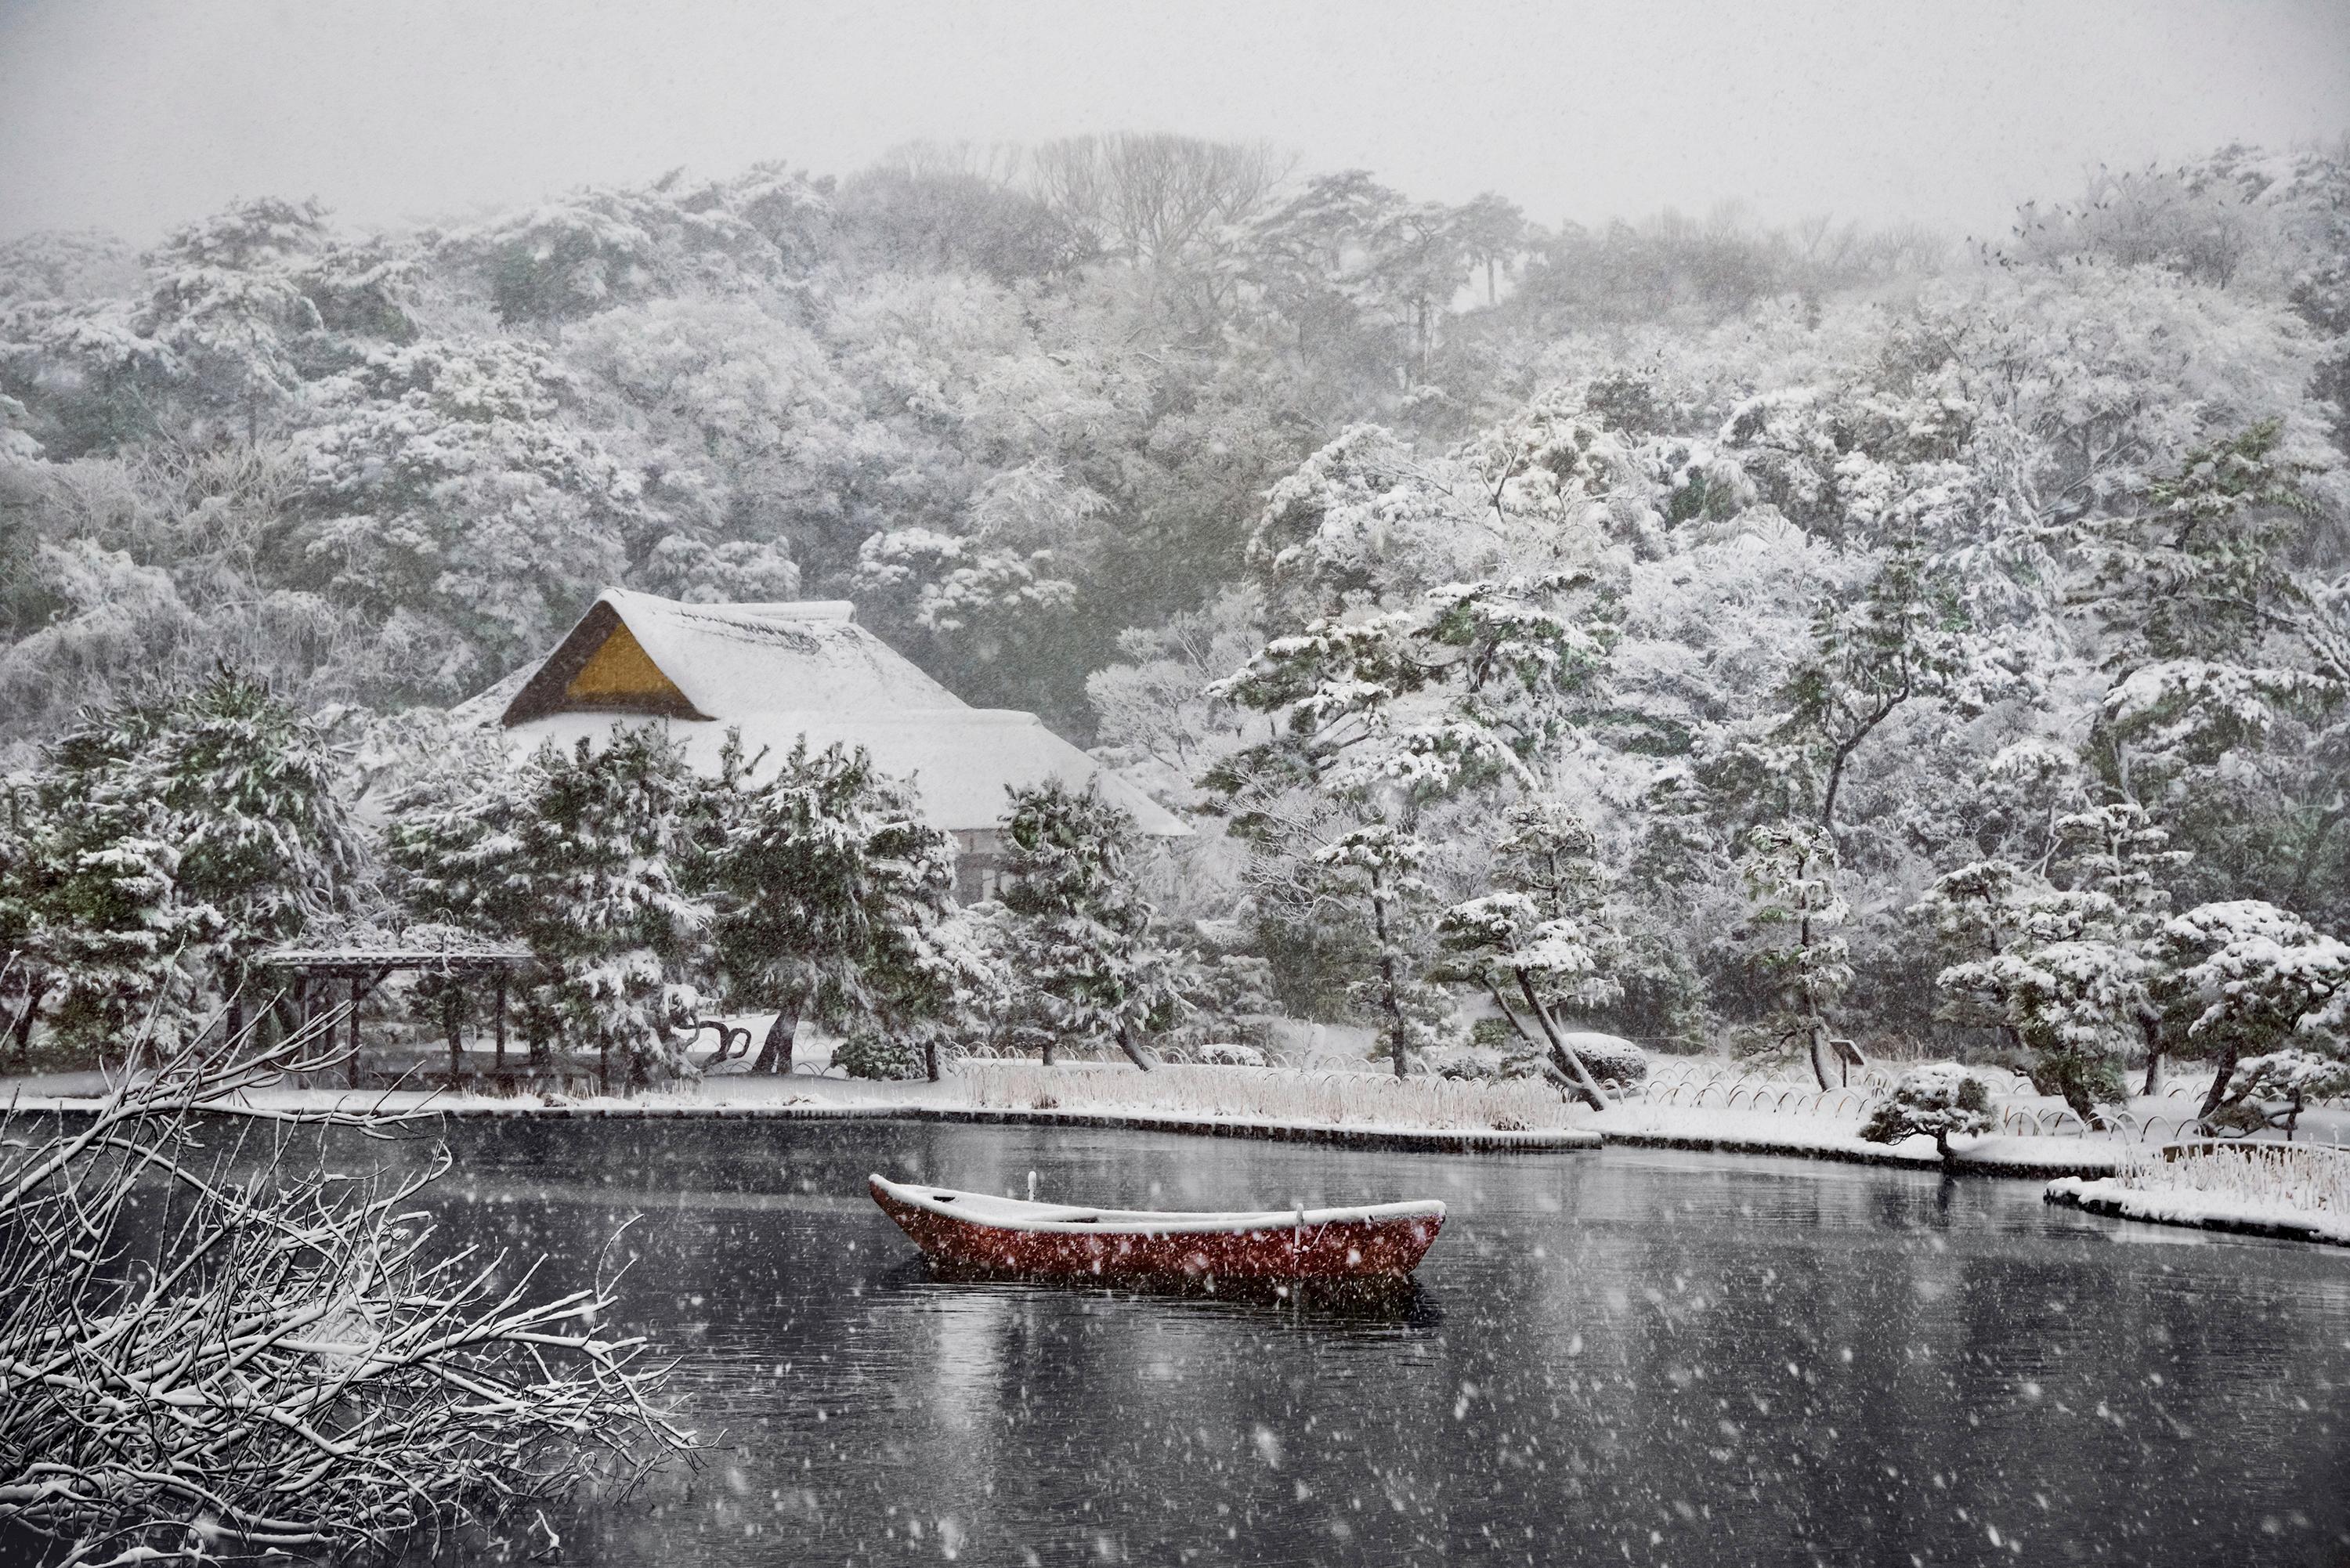 Boat Covered in Snow in Sankei-En Gardens, Japan, 2014  - Steve McCurry